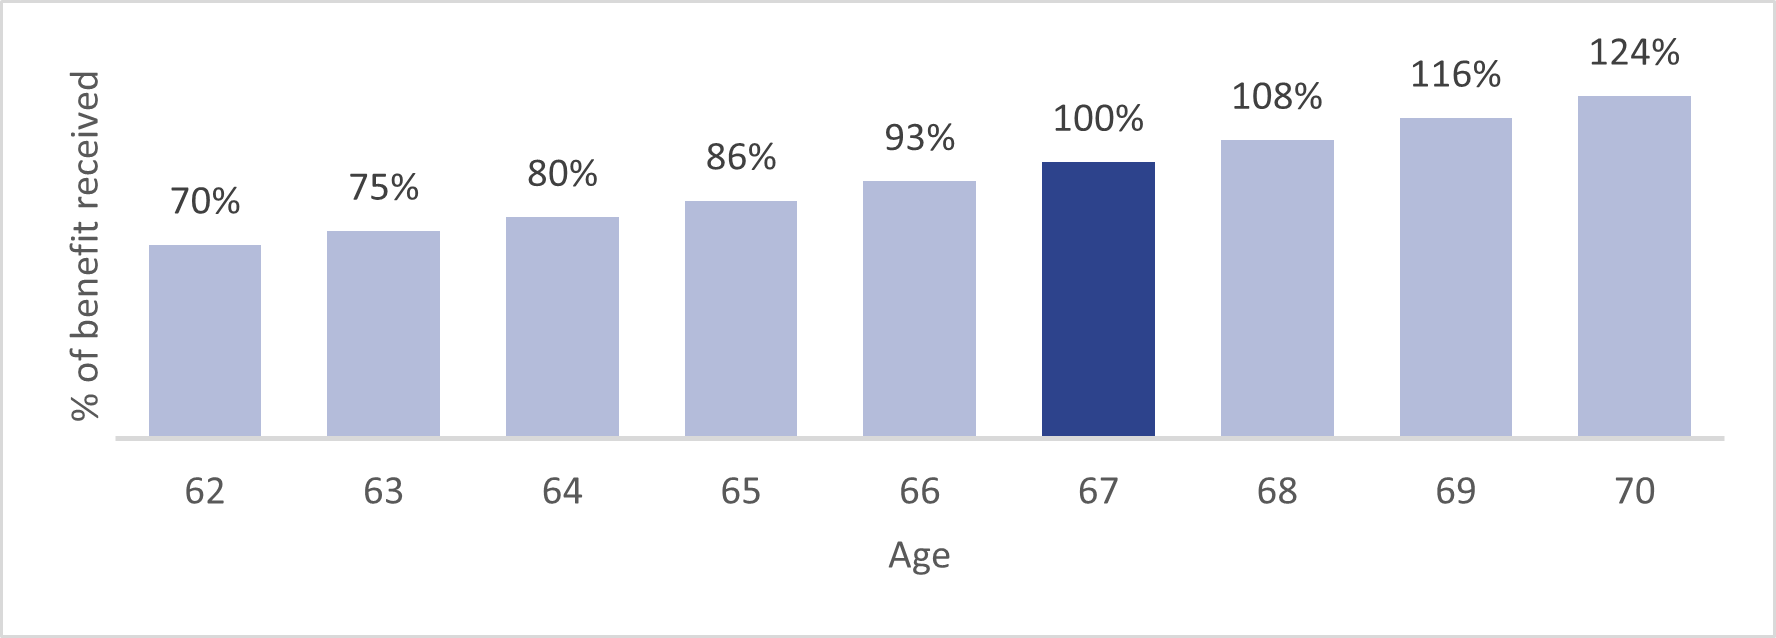 Benefit age graph